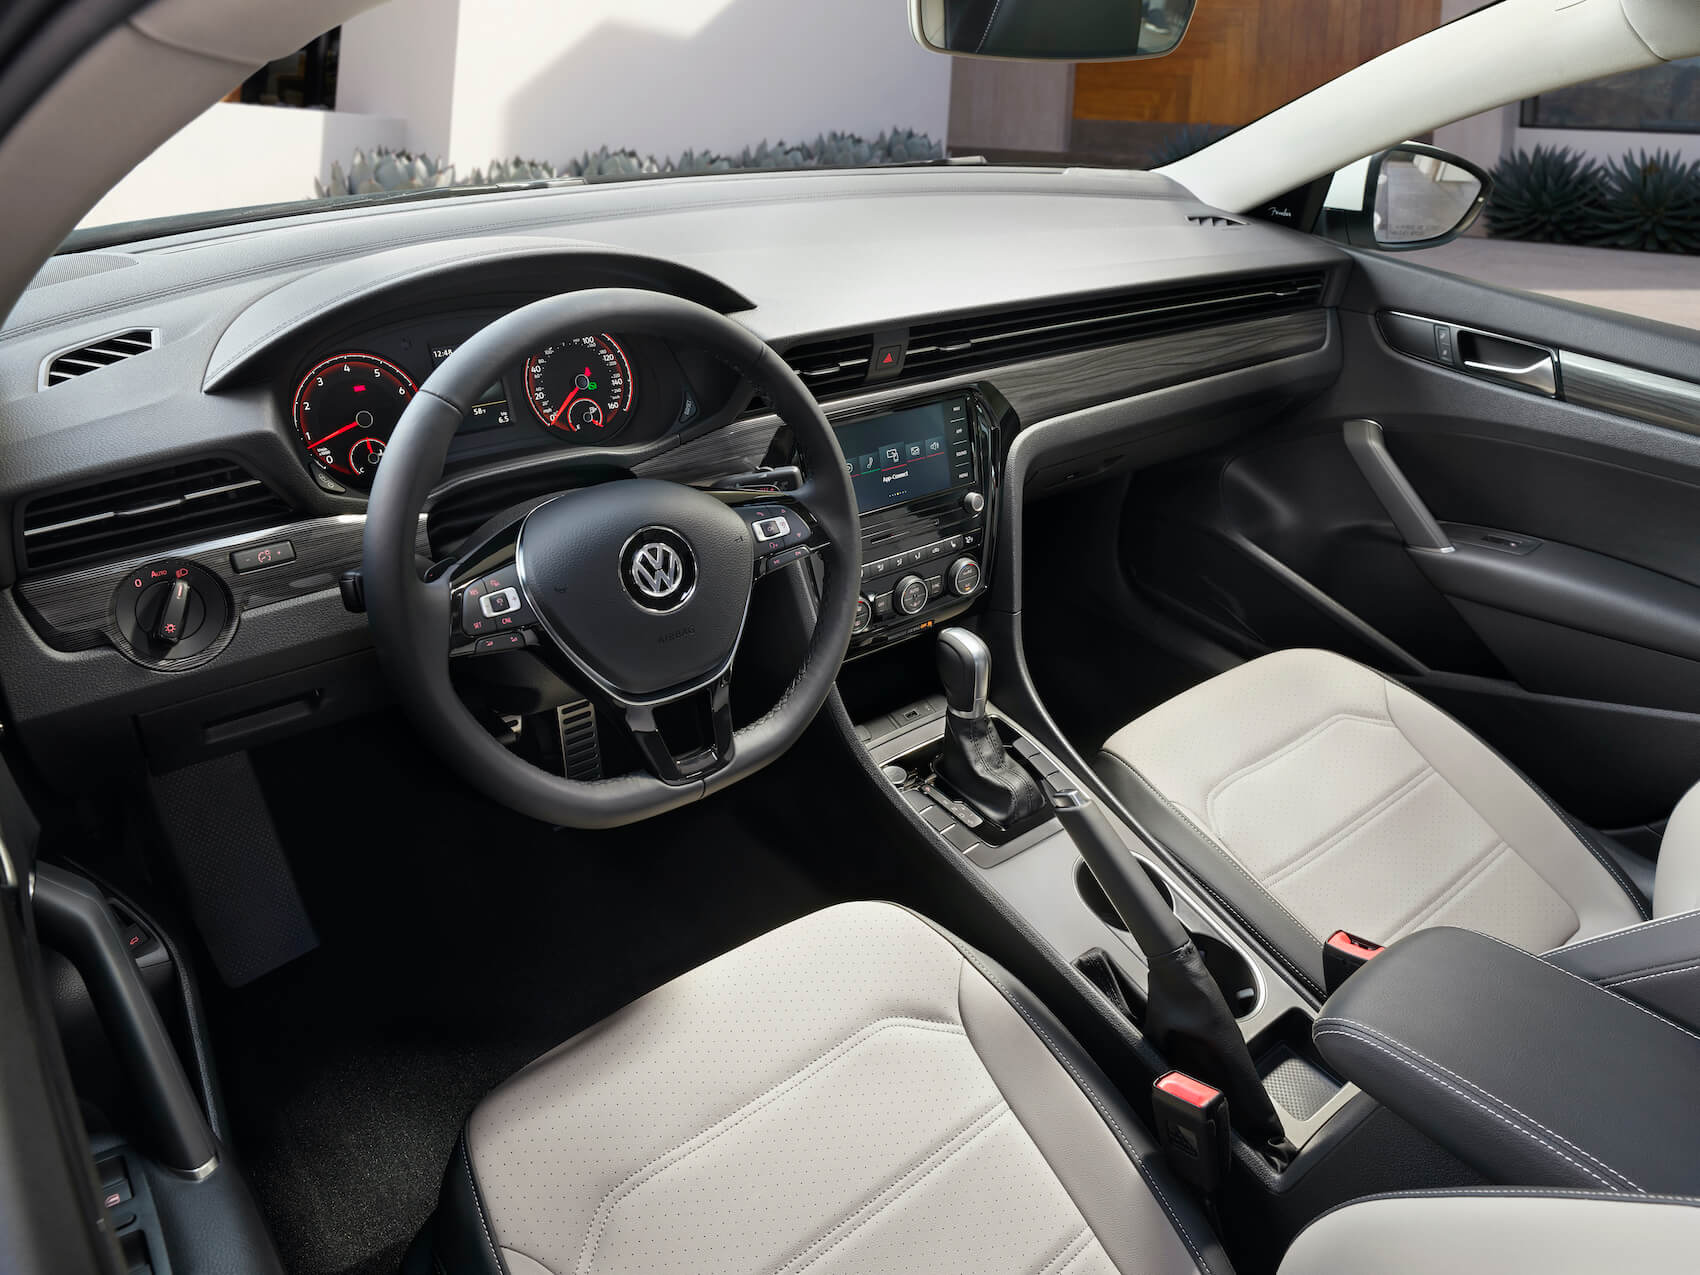 VW Interior Comfort